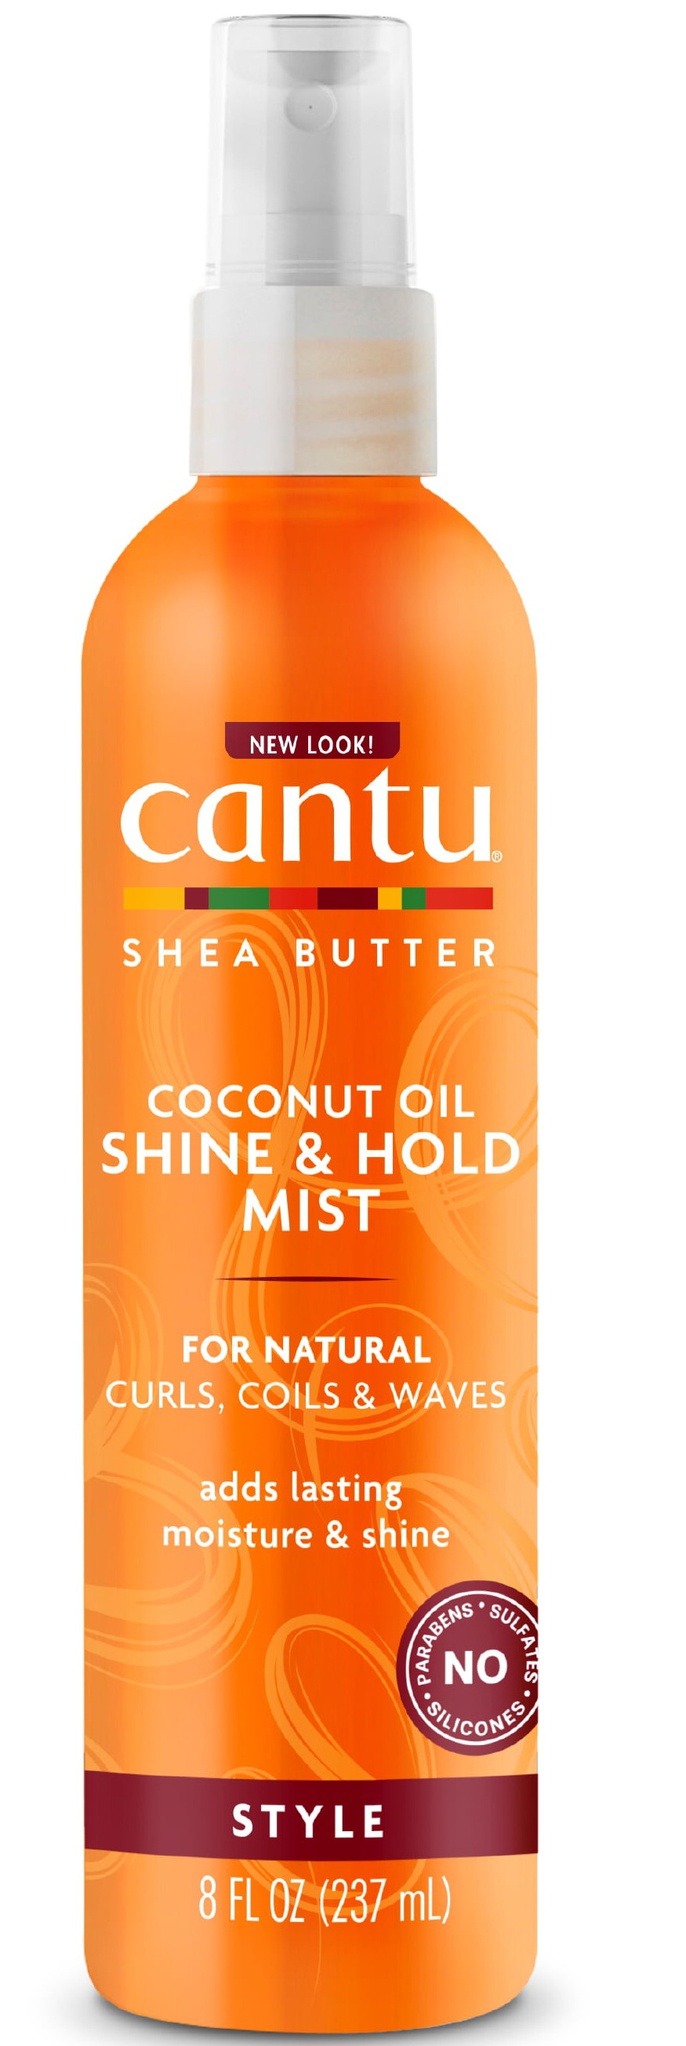 Cantu Coconut Oil Shine & Hold Mist